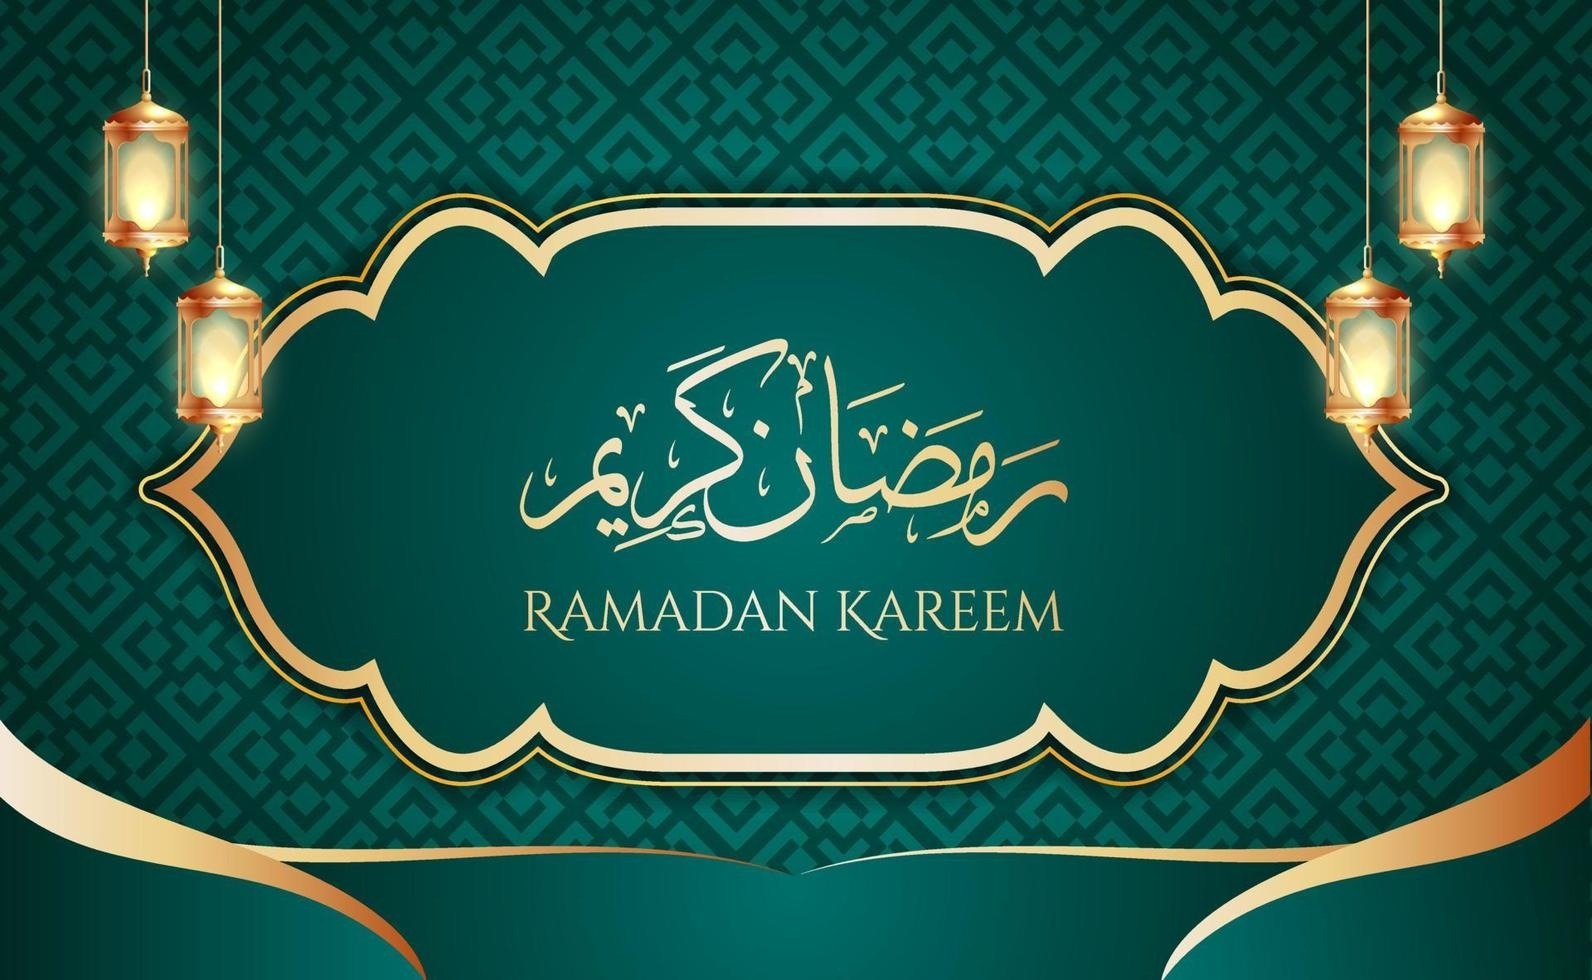 2023 Ramadan Kareem from the College